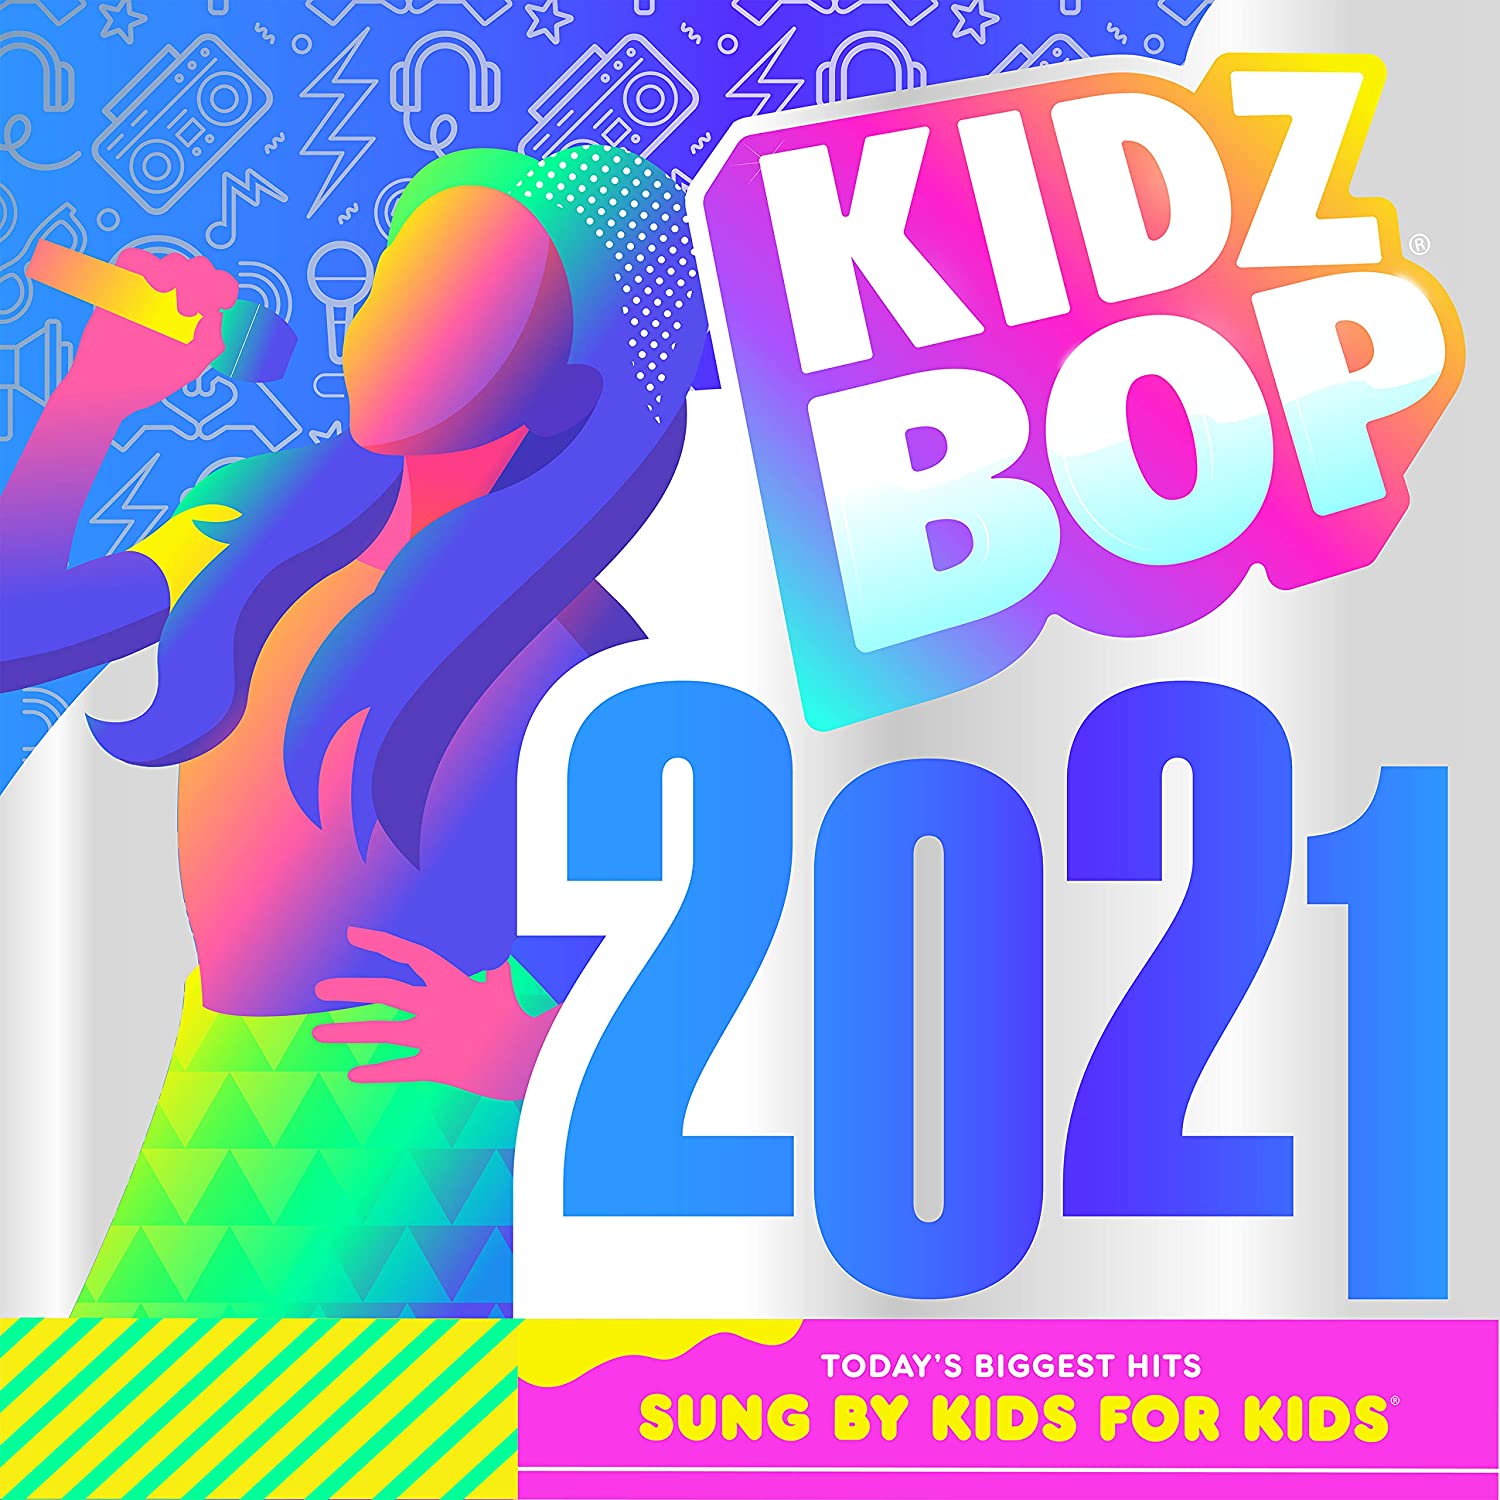 Yes, We Reviewed the New Kidz Bop Album